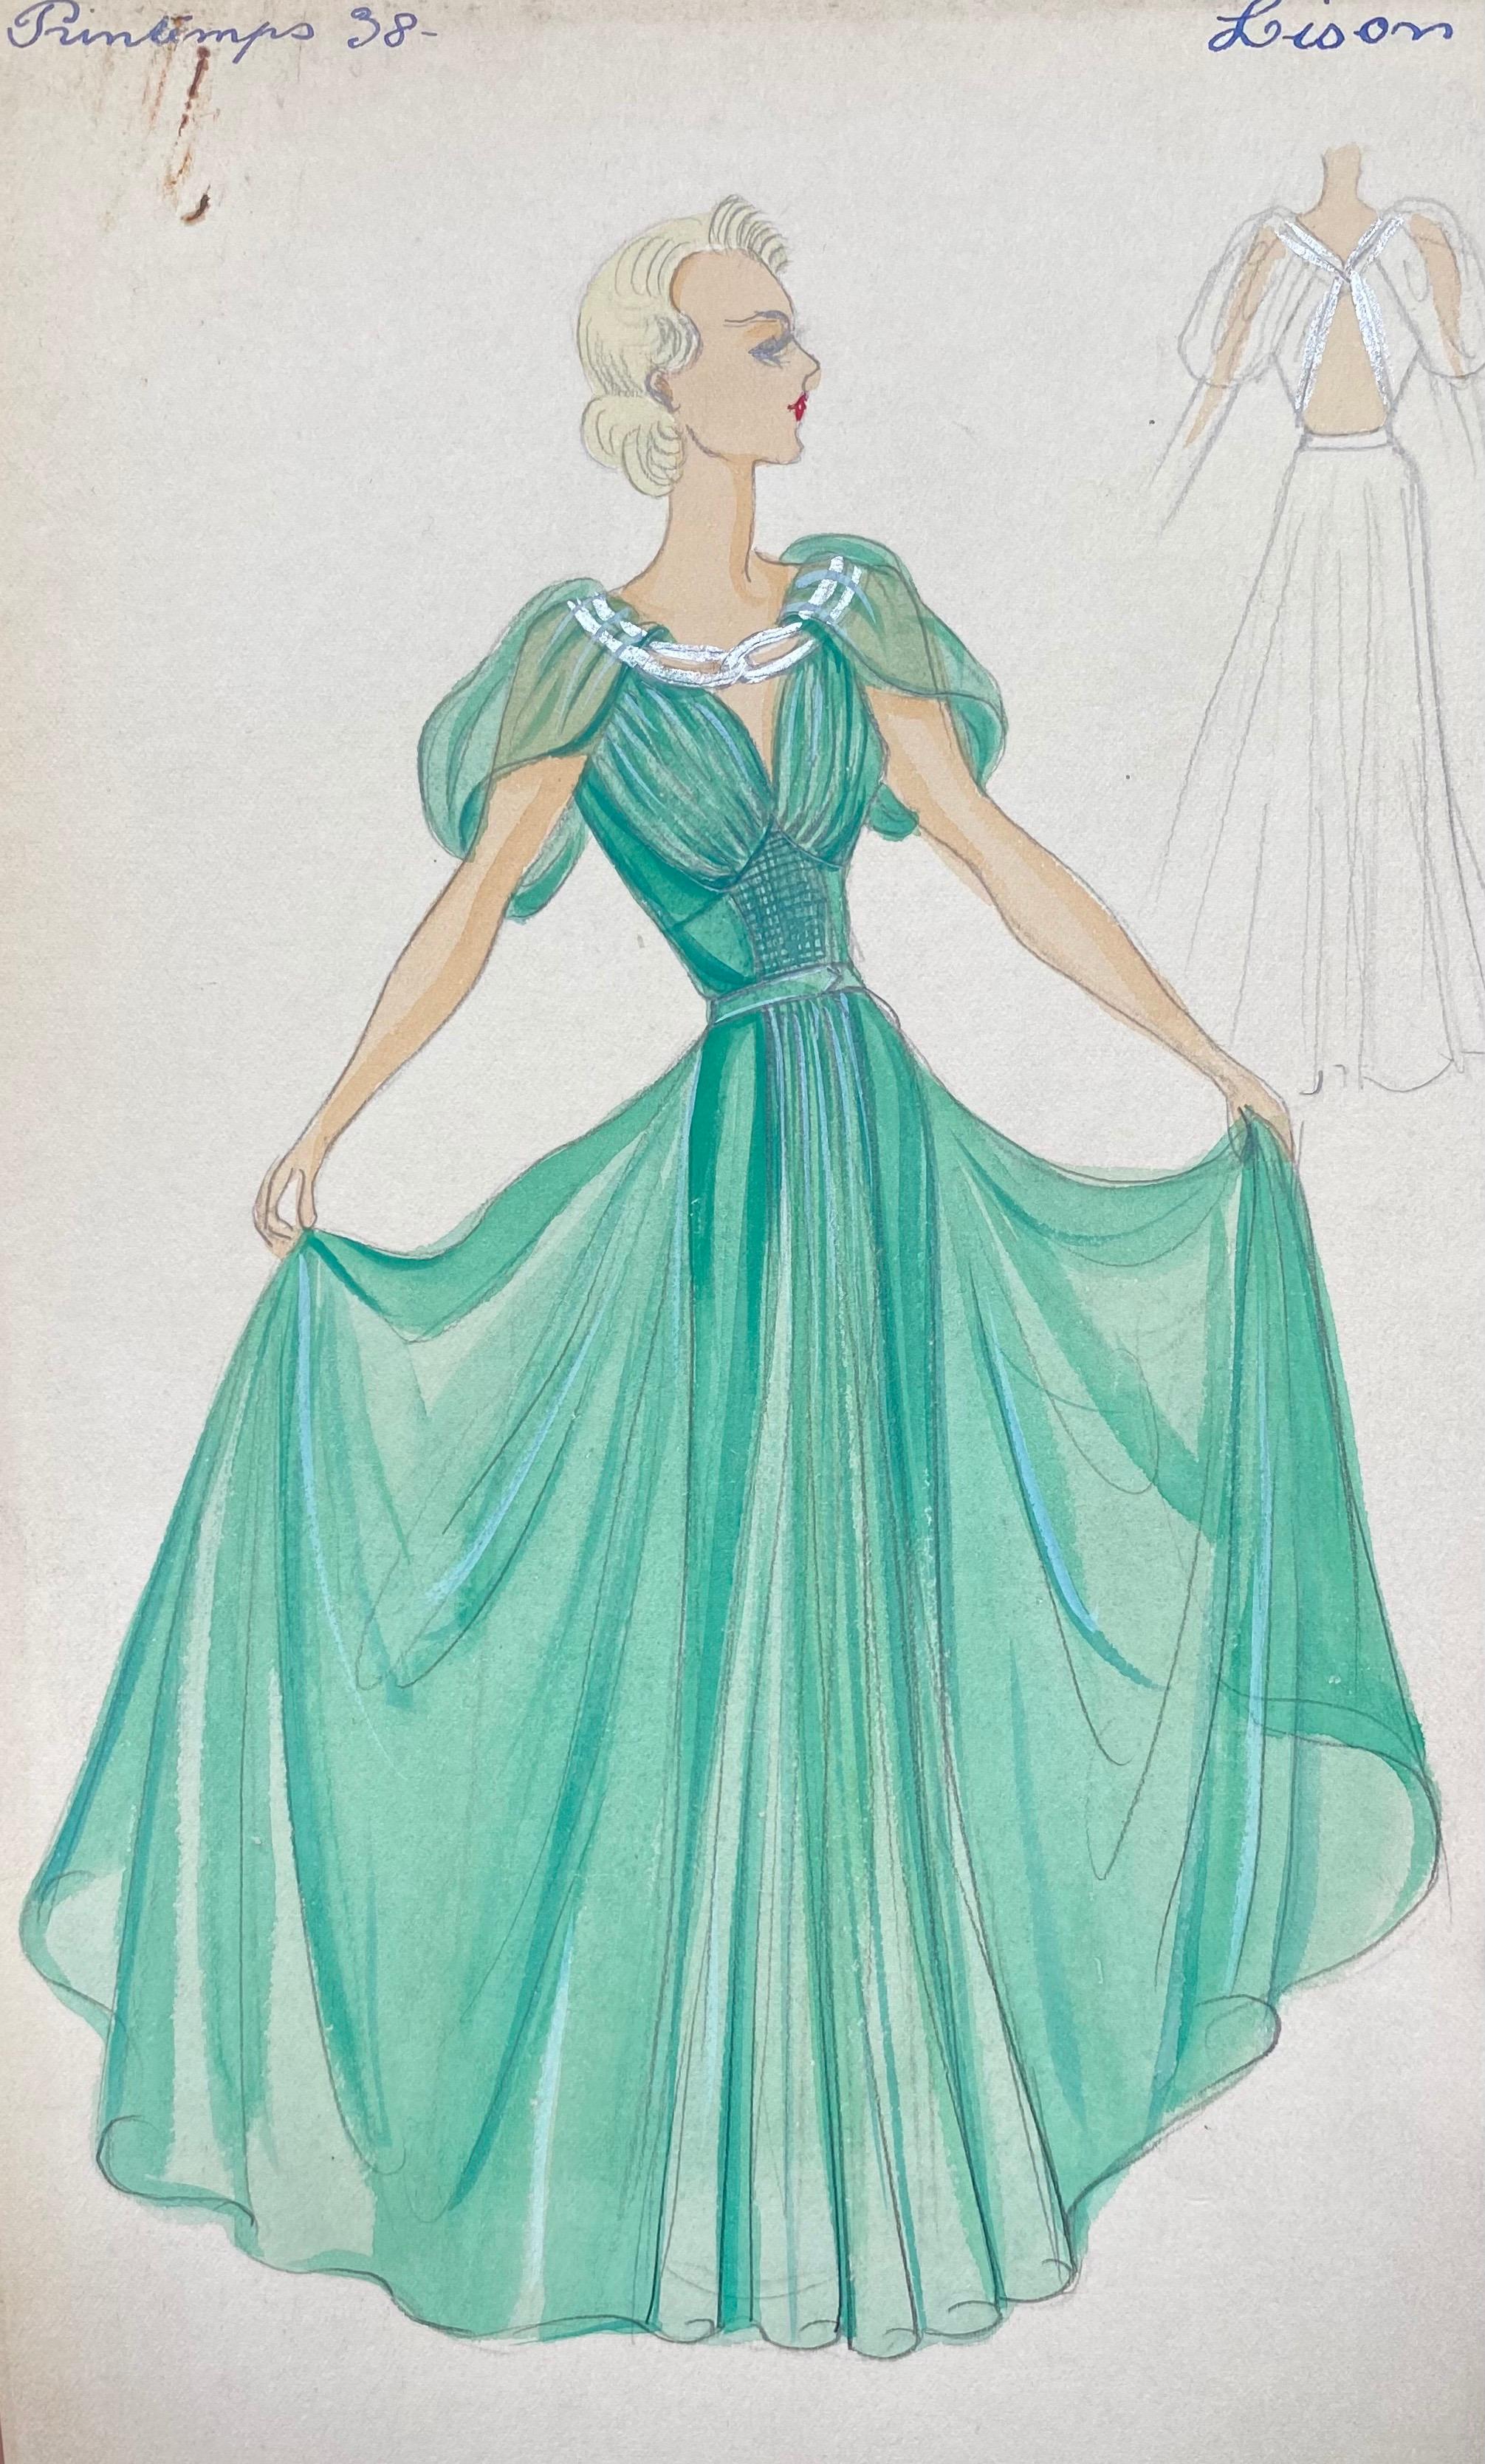 Unknown Portrait Painting - 1930's Original Parisian Fashion Illustration Watercolor Green Ballgown Dress